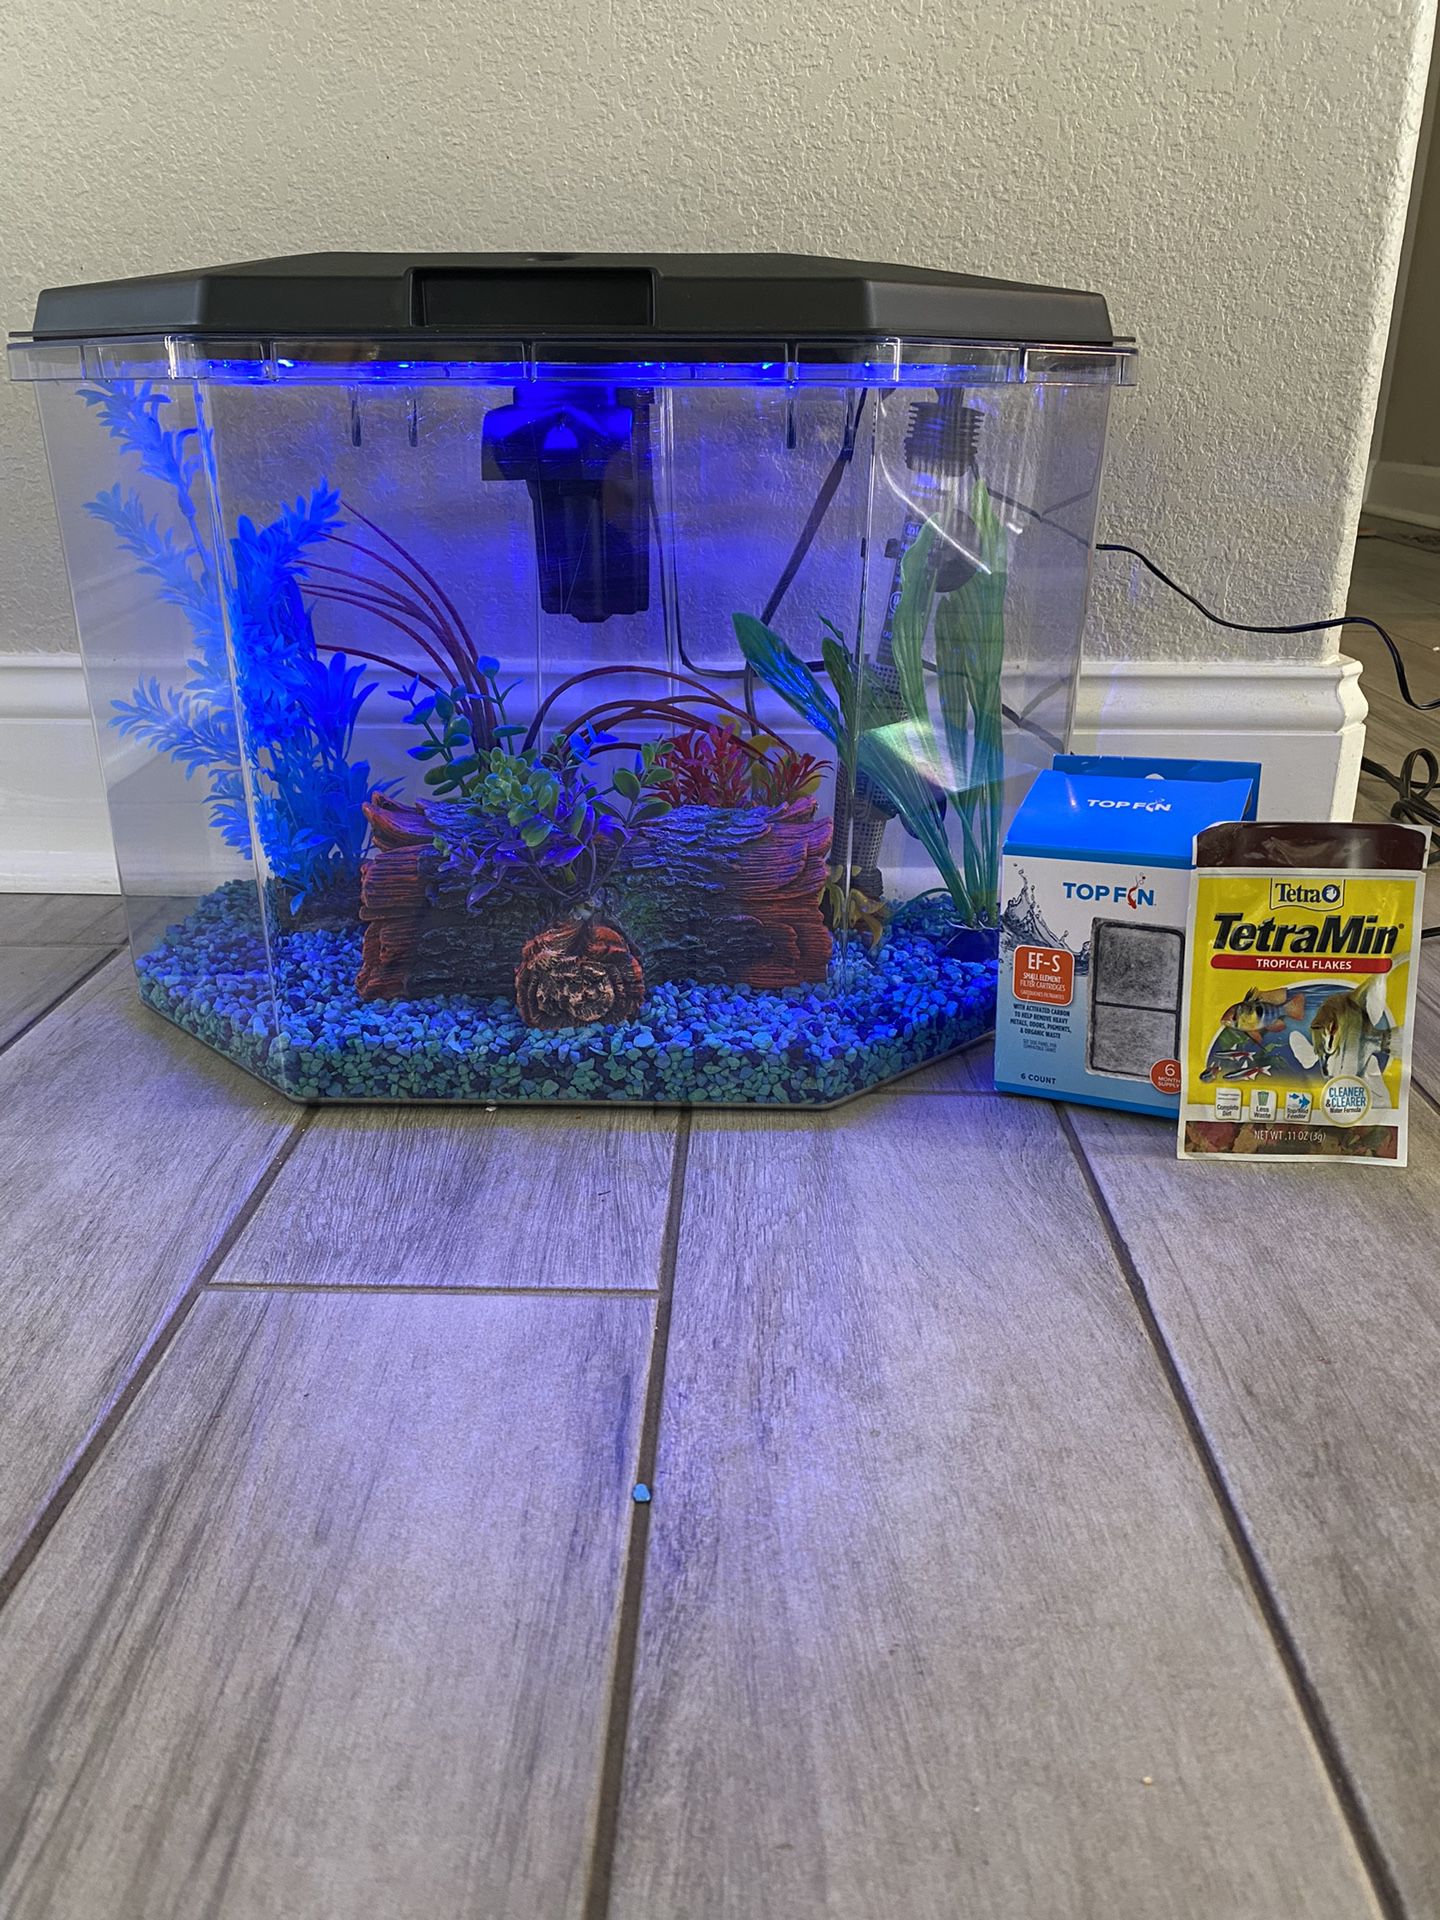 Small Fish Tank - 6.5 Gals